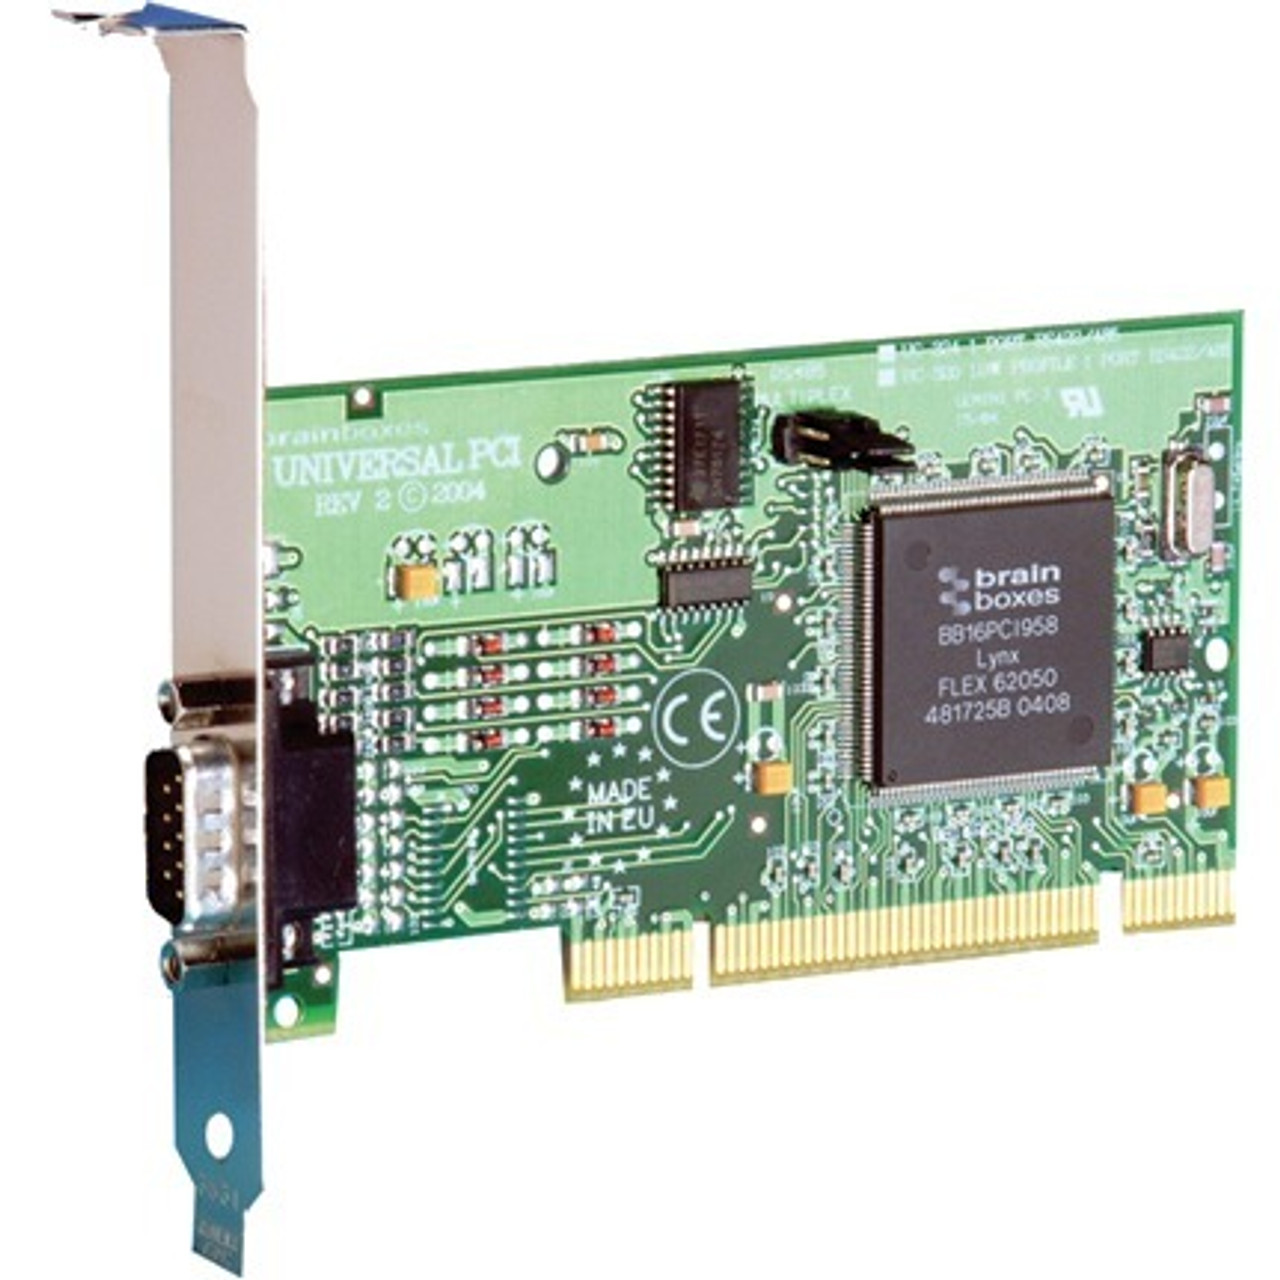 UC-324 Brainboxes PCI 1p RS422/485